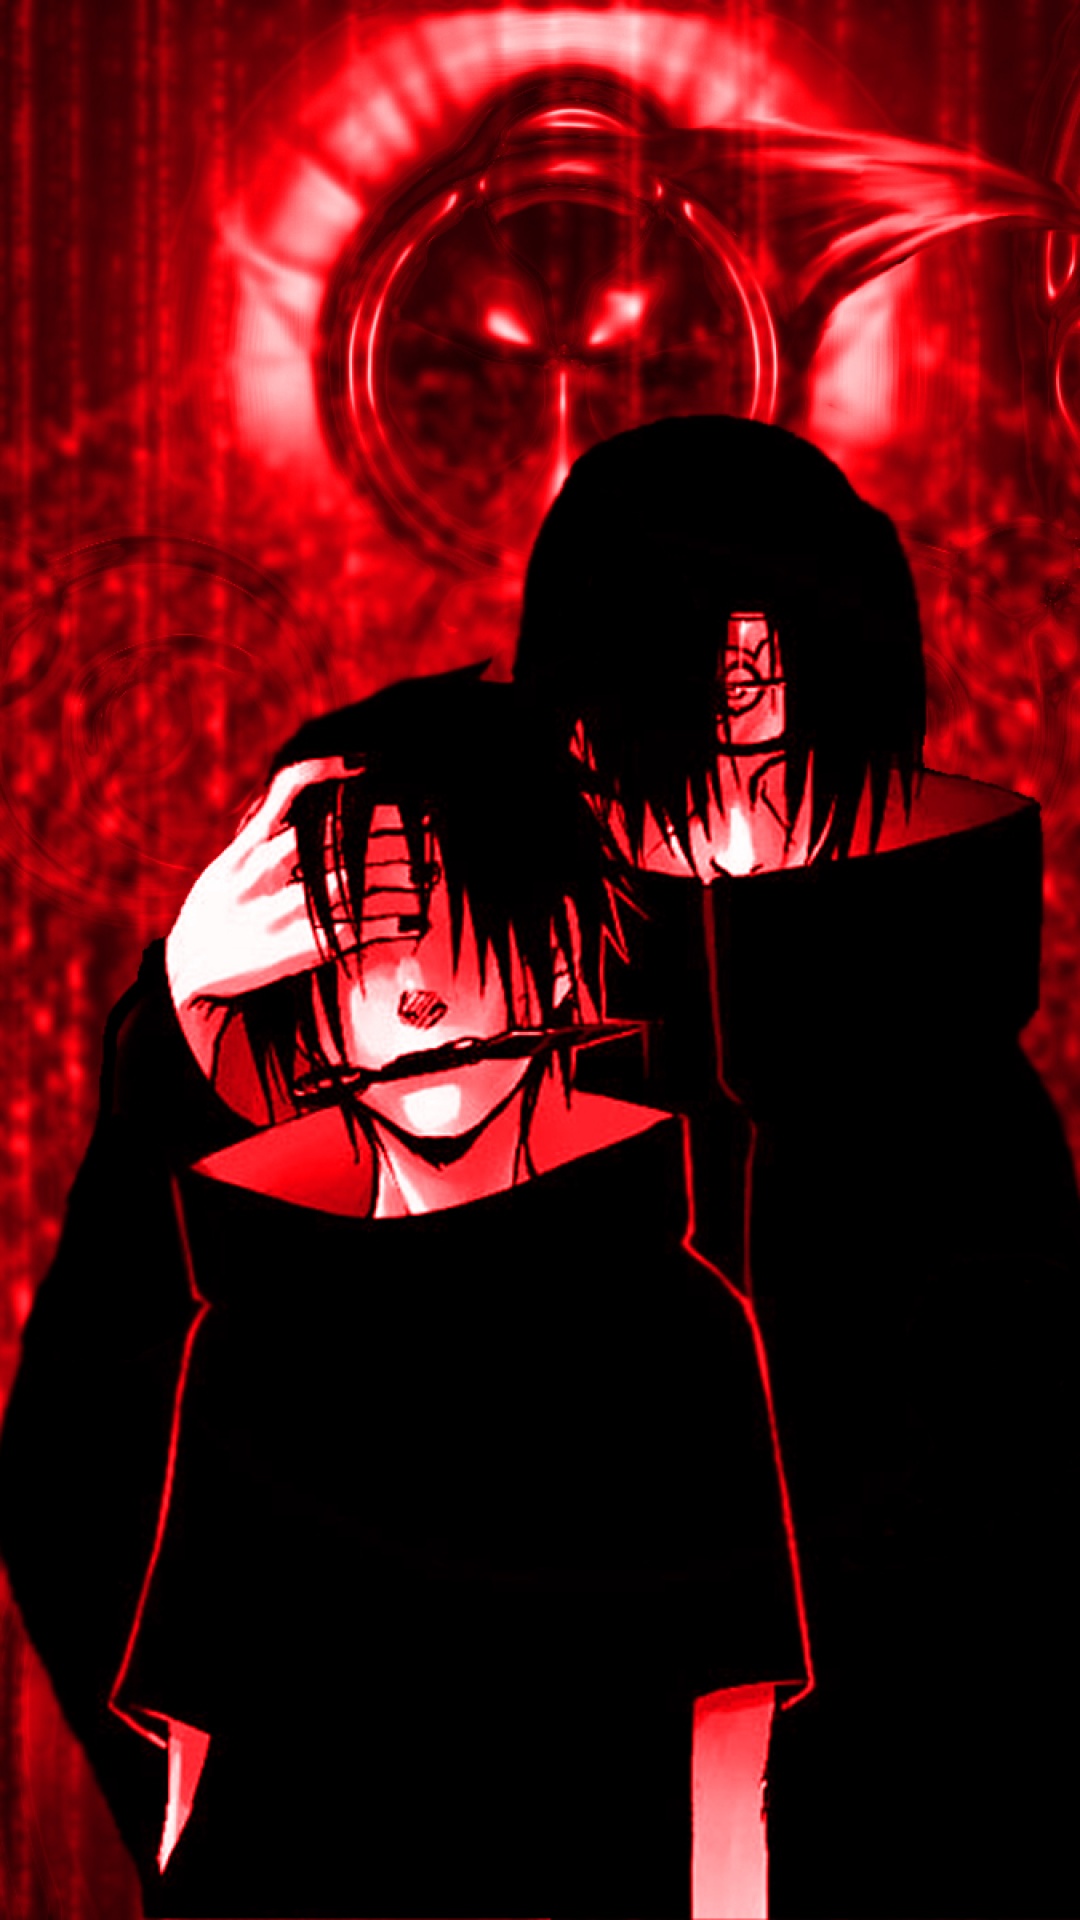 sasuke uchiha wallpaper iphone,red,fictional character,illustration,supervillain,art